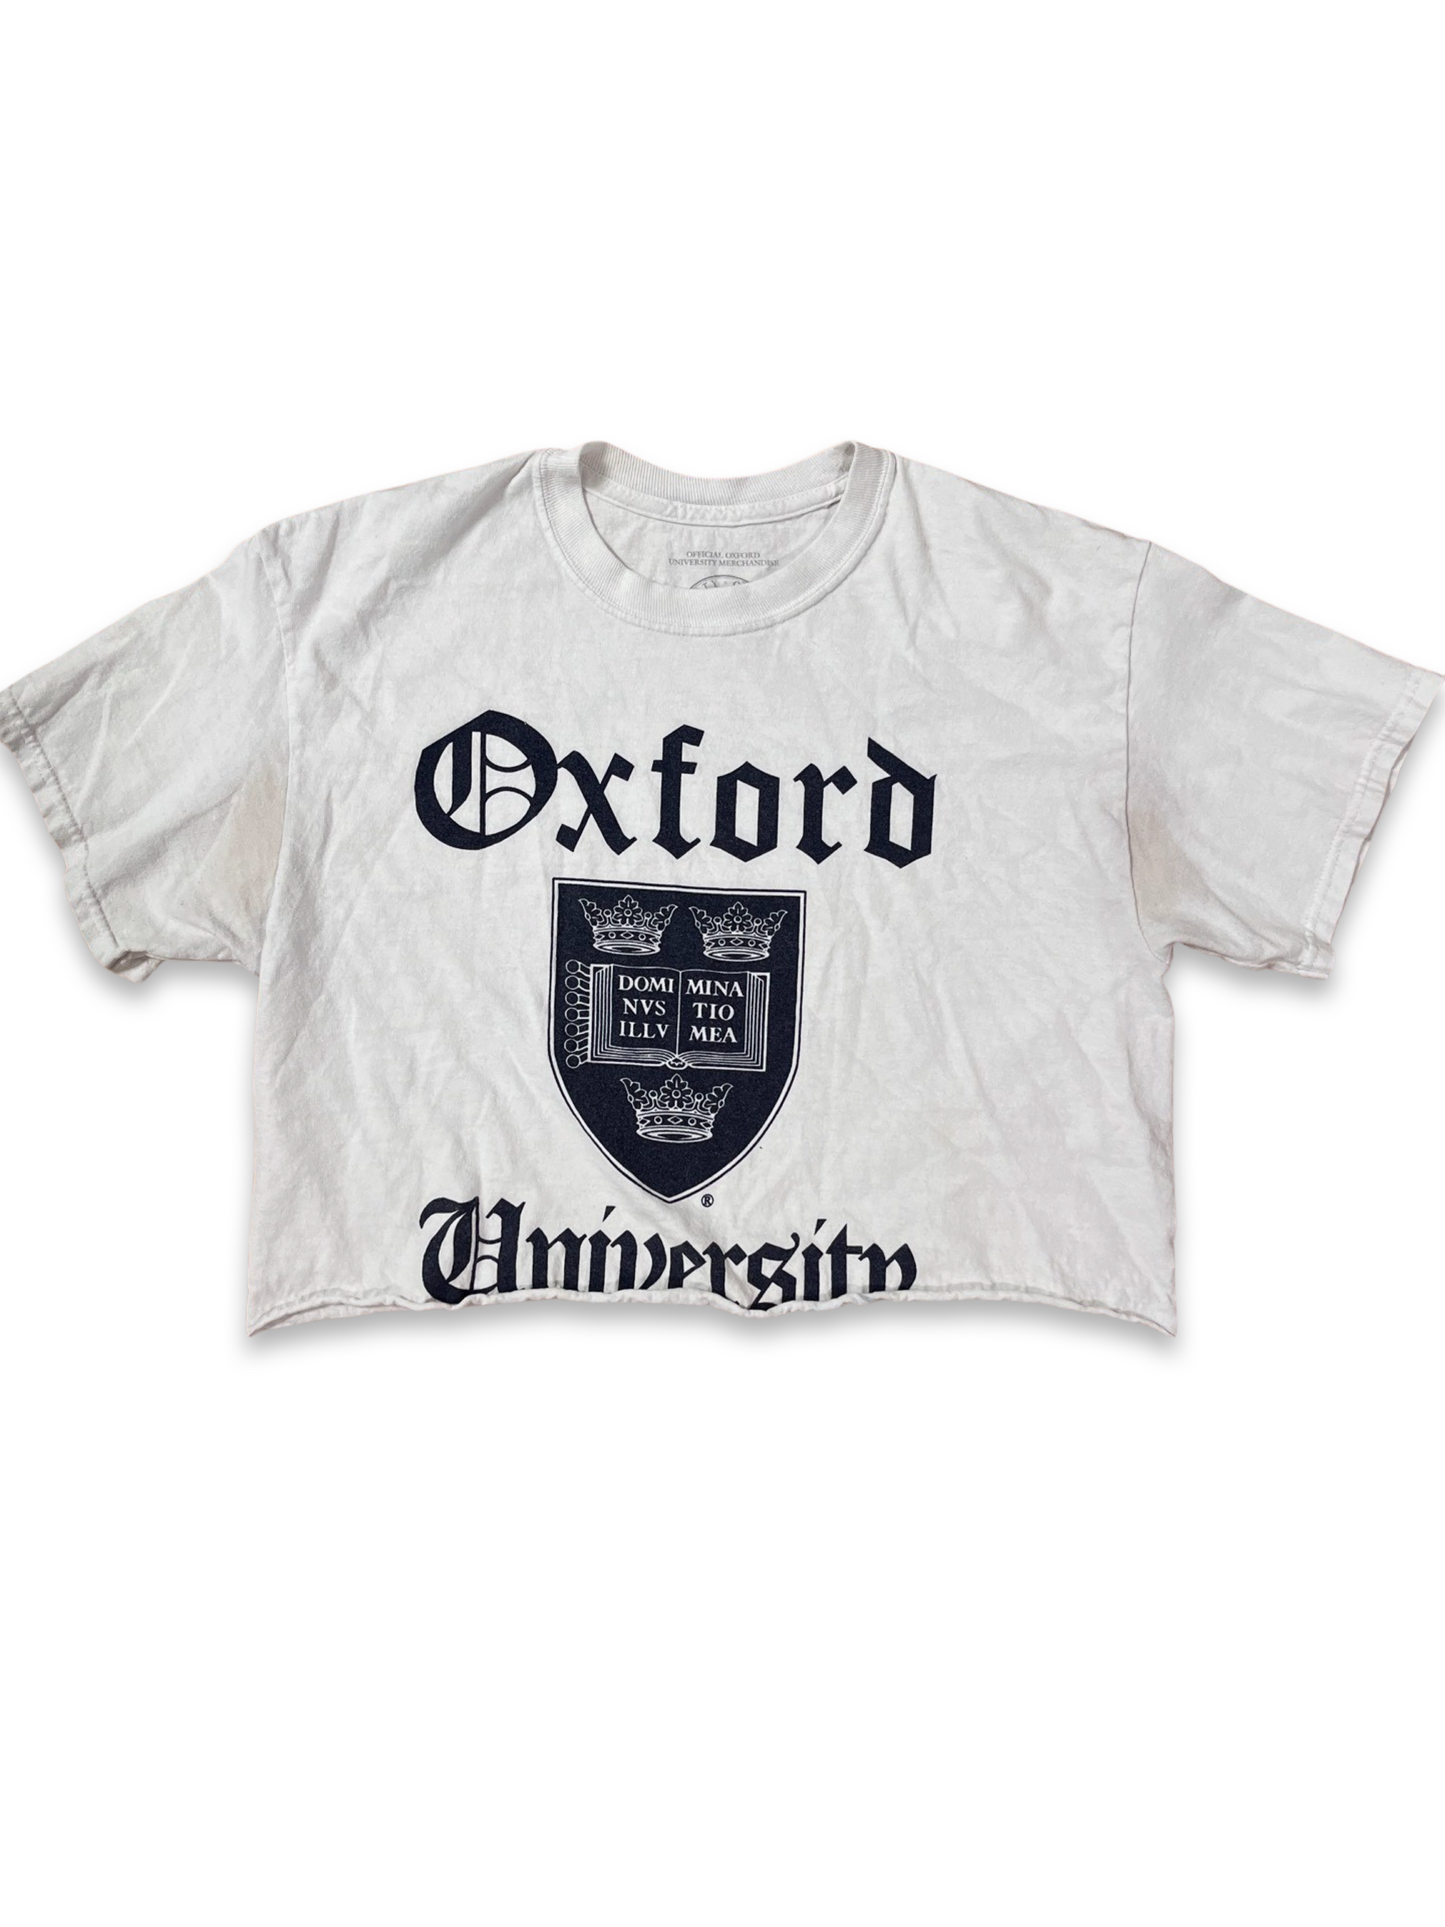 Oxford Cropped Tee - White (S)